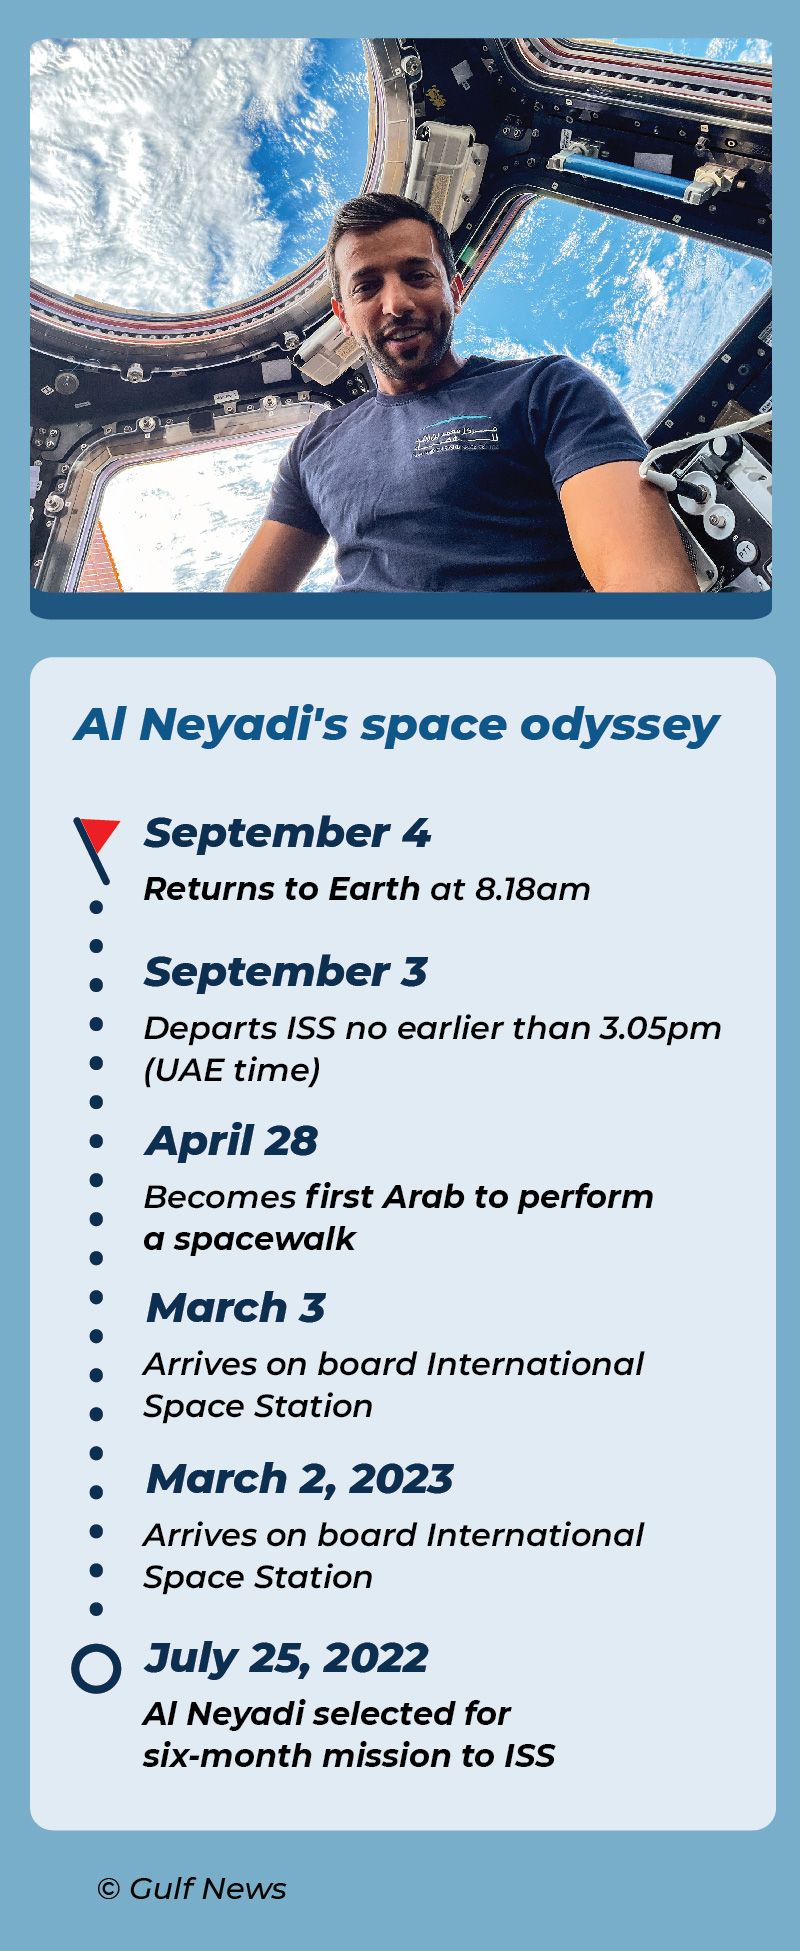 Sultan Al Neyadi's ISS Mission - TimeLine 